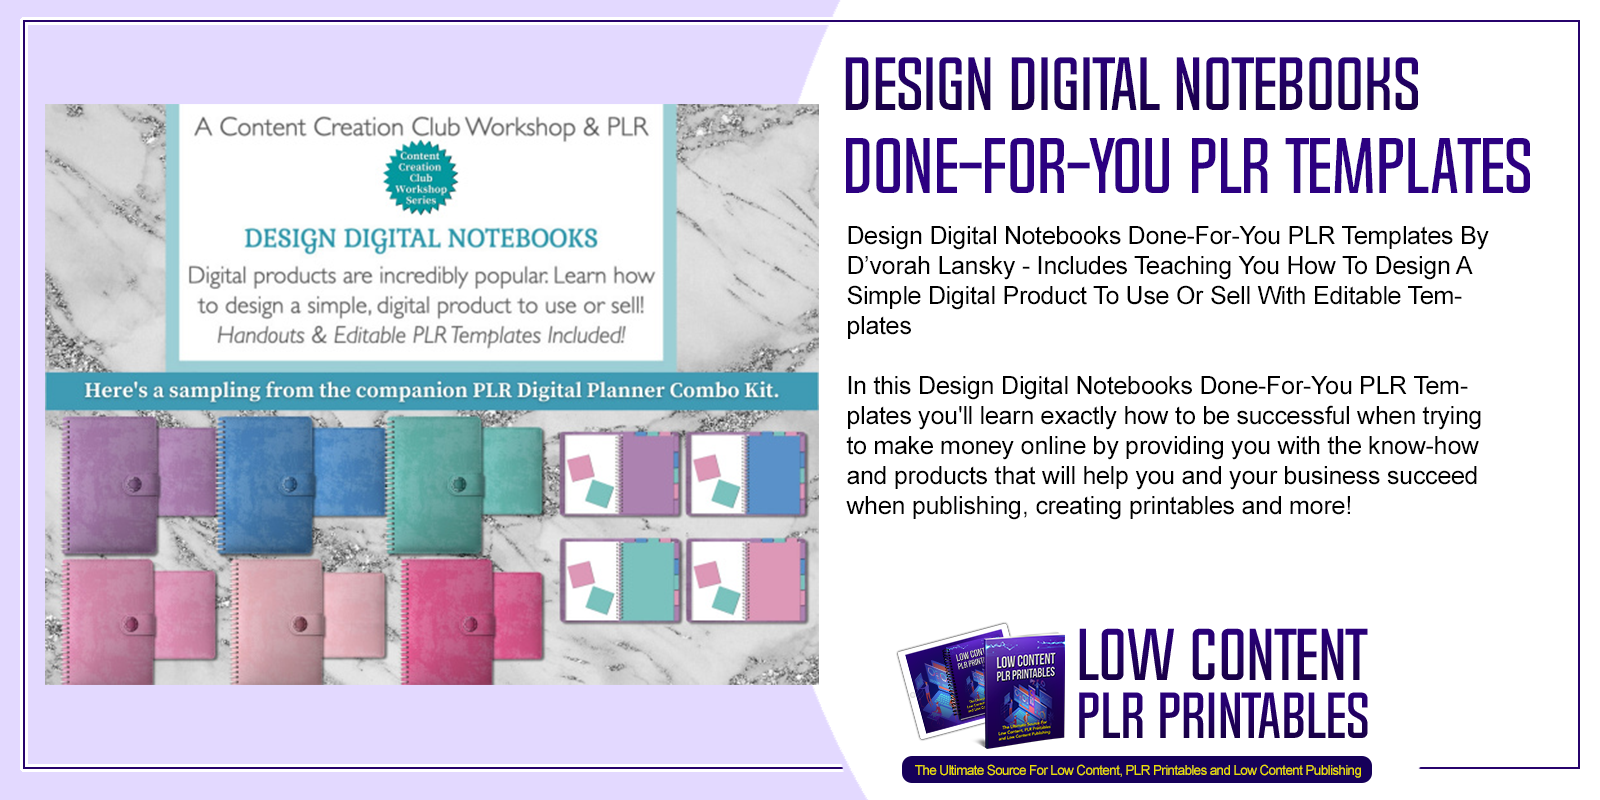 Design Digital Notebooks Done For You PLR Templates